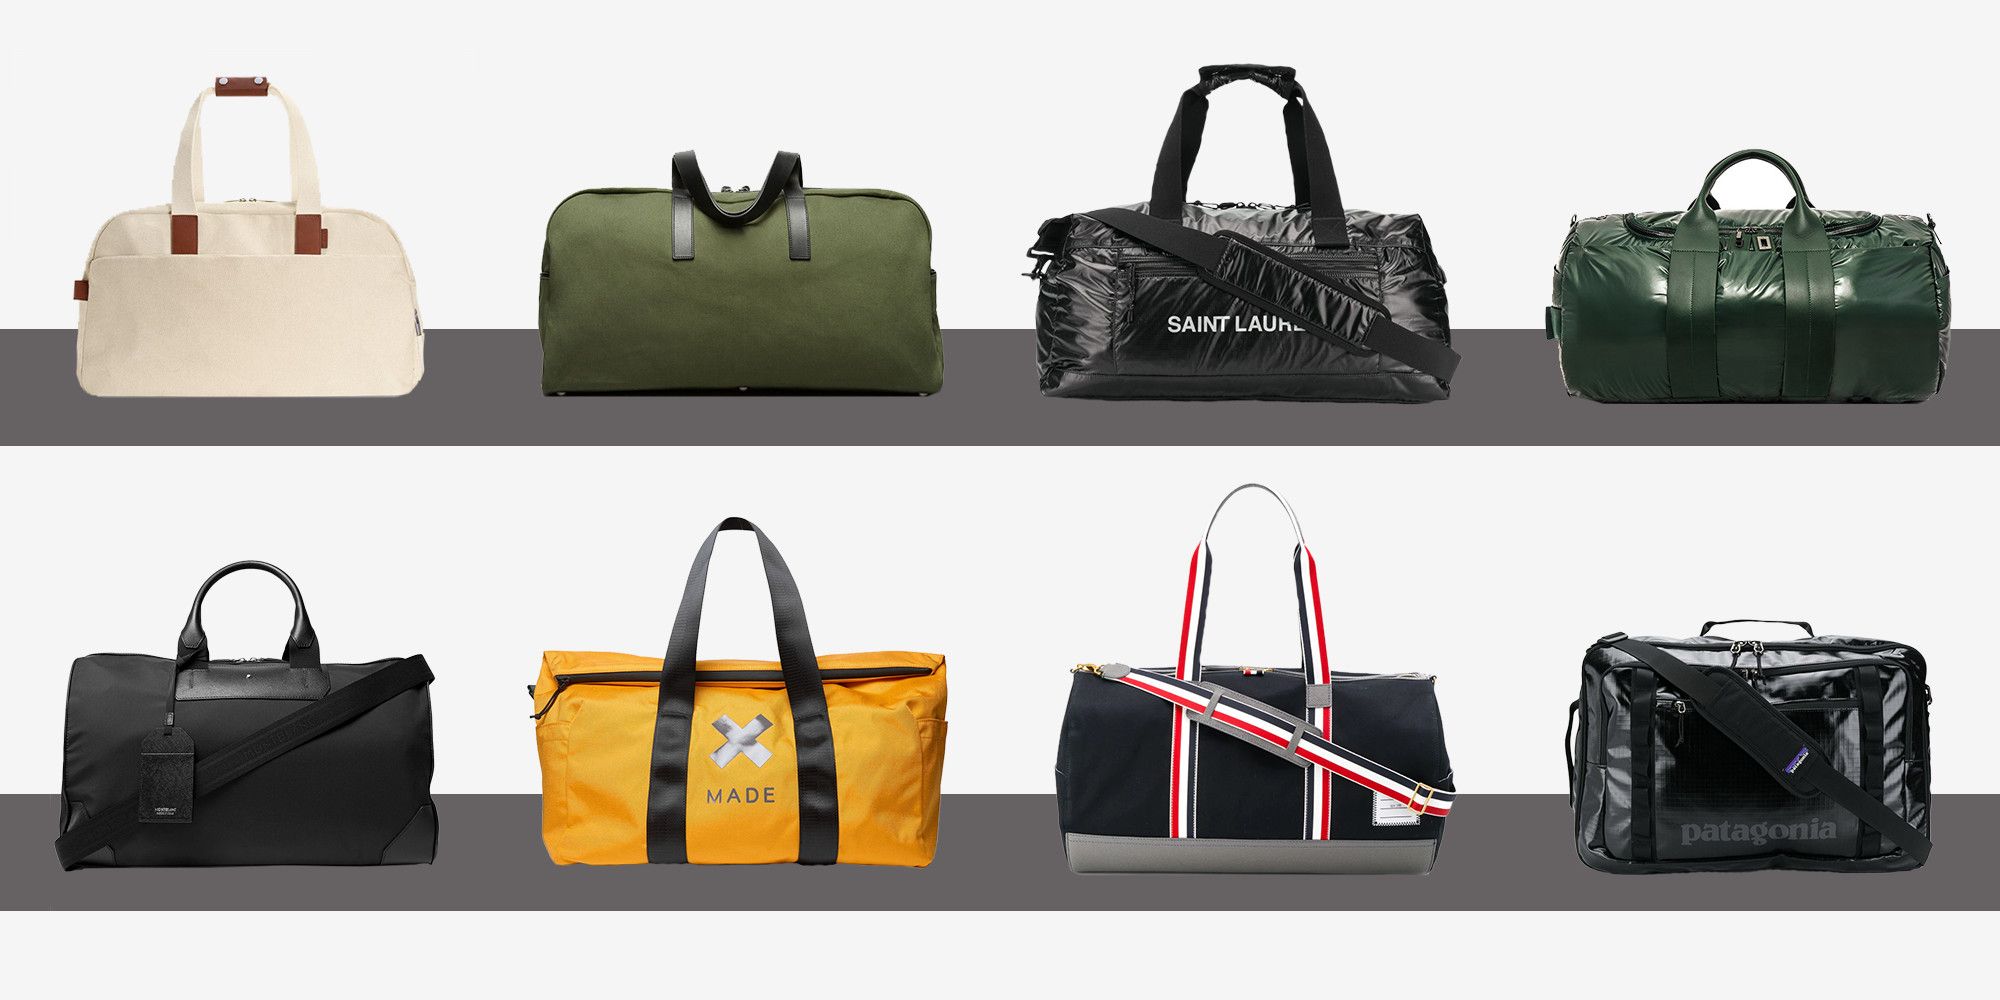 Leather Weekender Bag Holdall Bag Large Travel Bag Tassen & portemonnees Bagage & Reizen Duffelbags Personalized Outdoor Bag Leather Gym Bag Leather Duffle Bag Groomsmen Gift Bag 